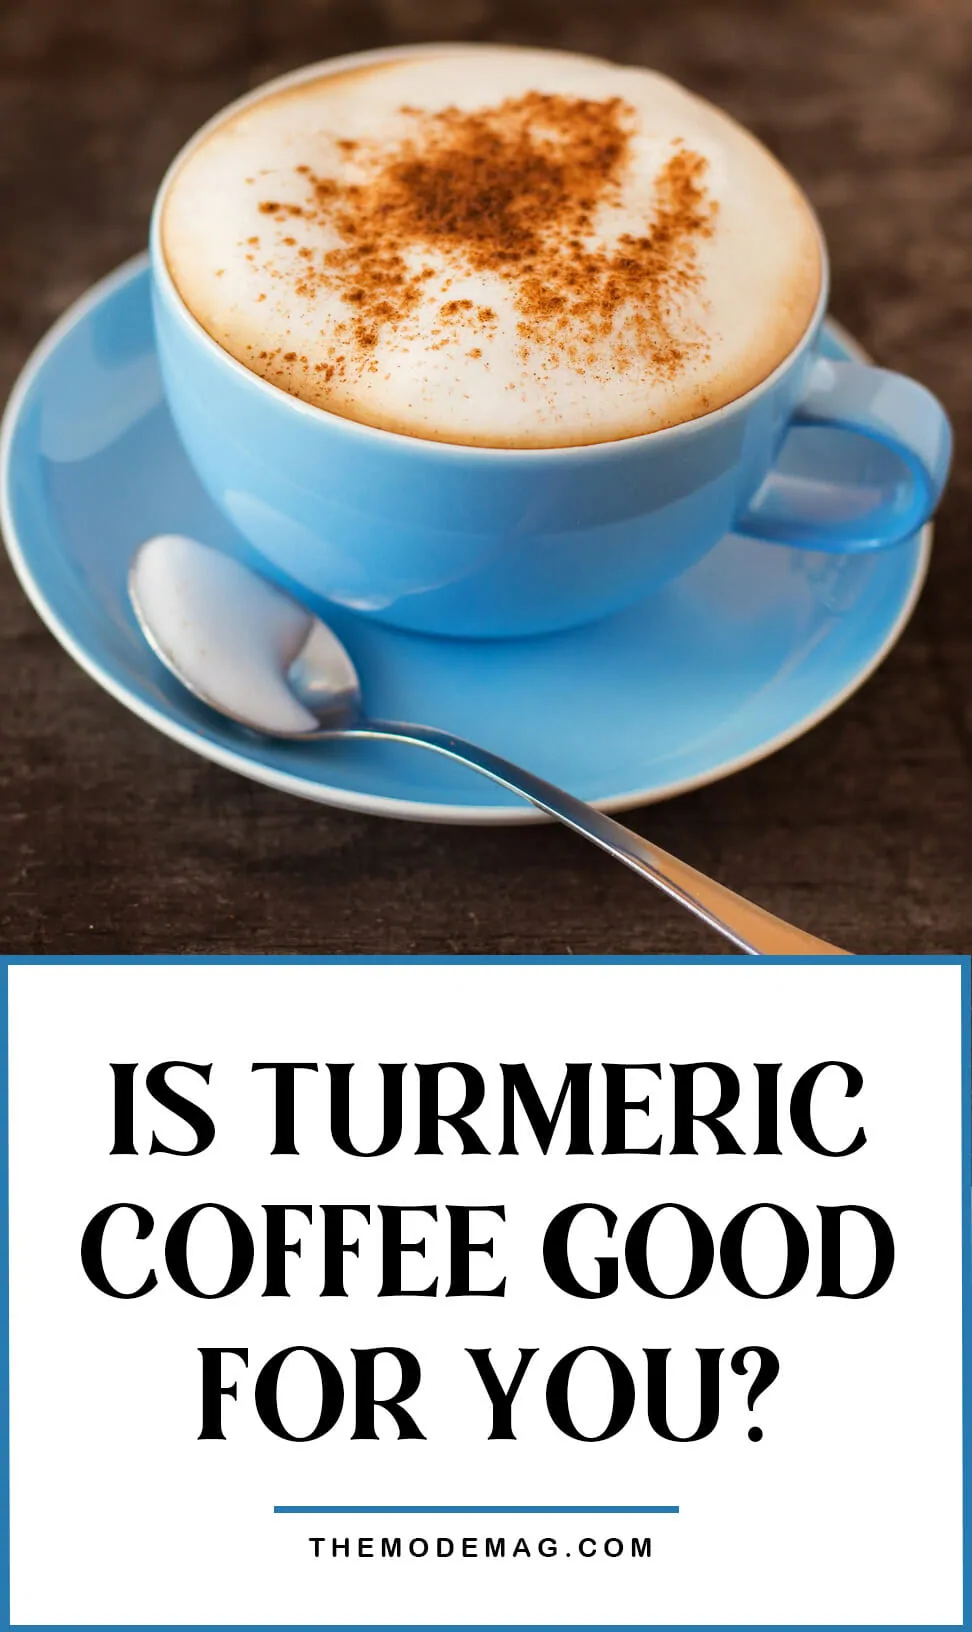 Is Turmeric Coffee Good For You?